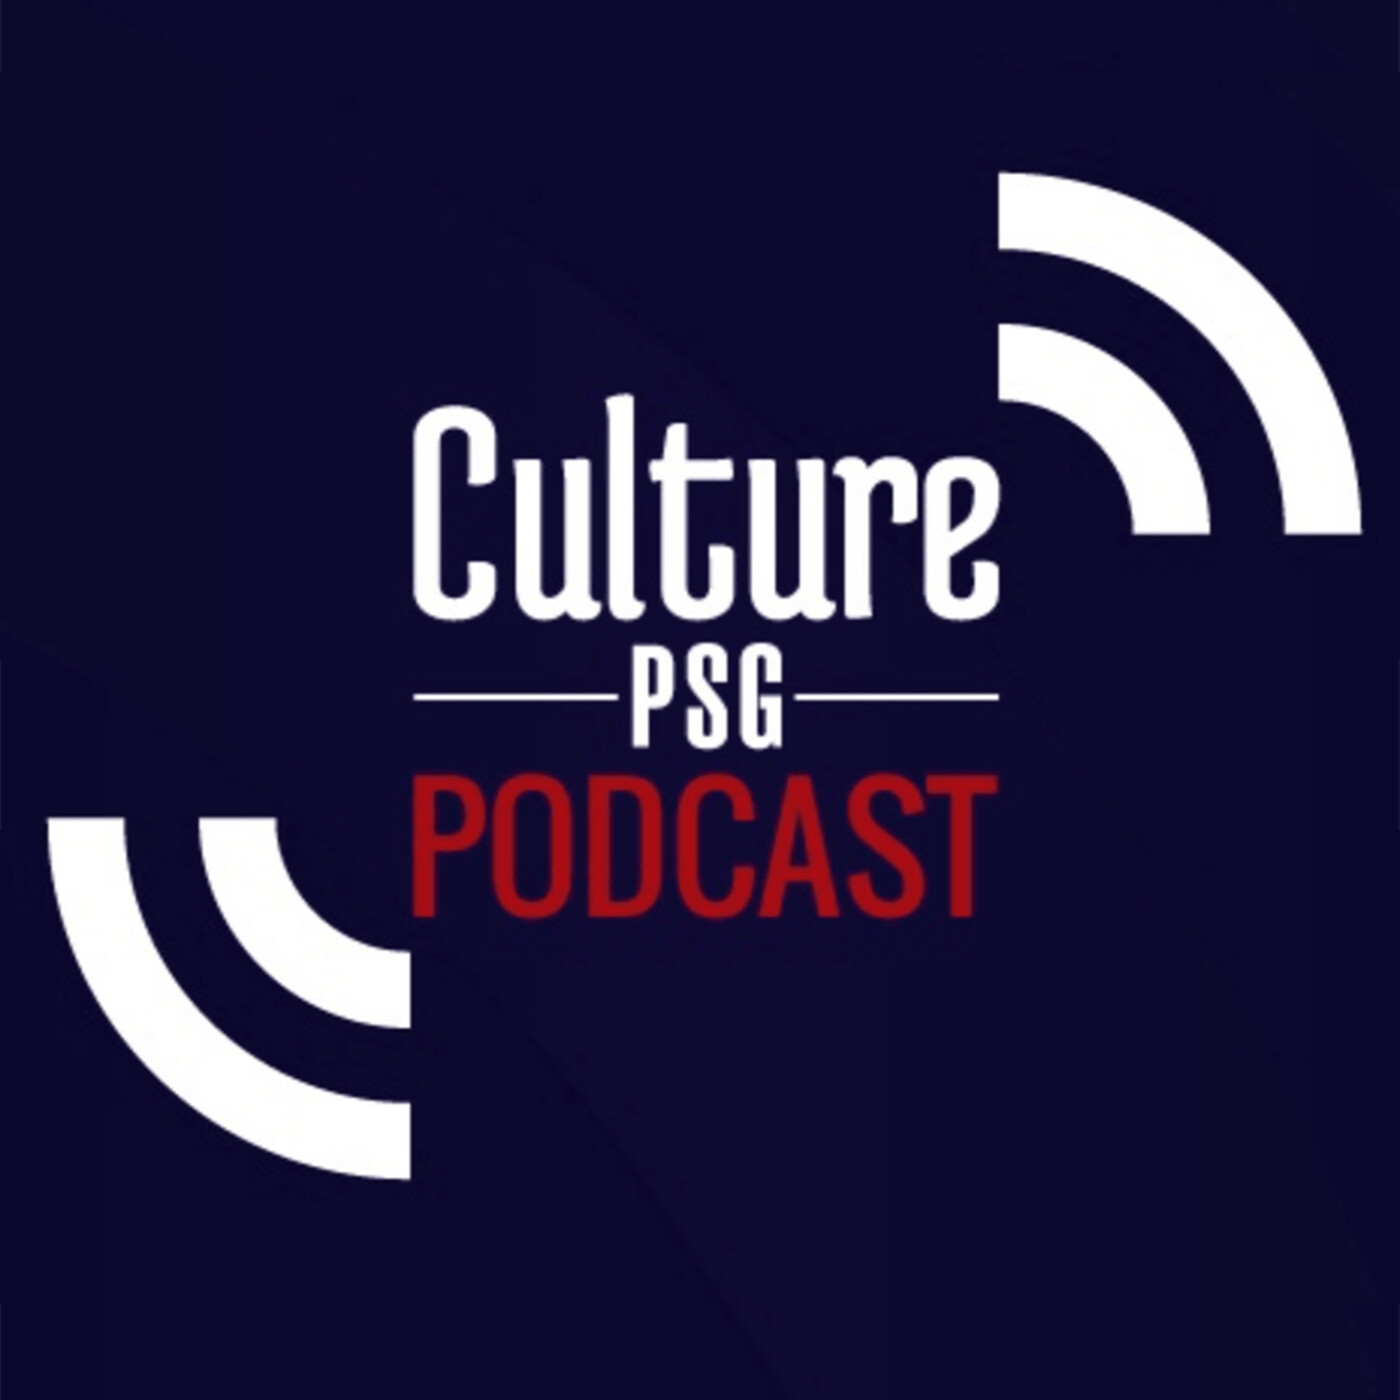 Podcast de CulturePSG:CulturePSG